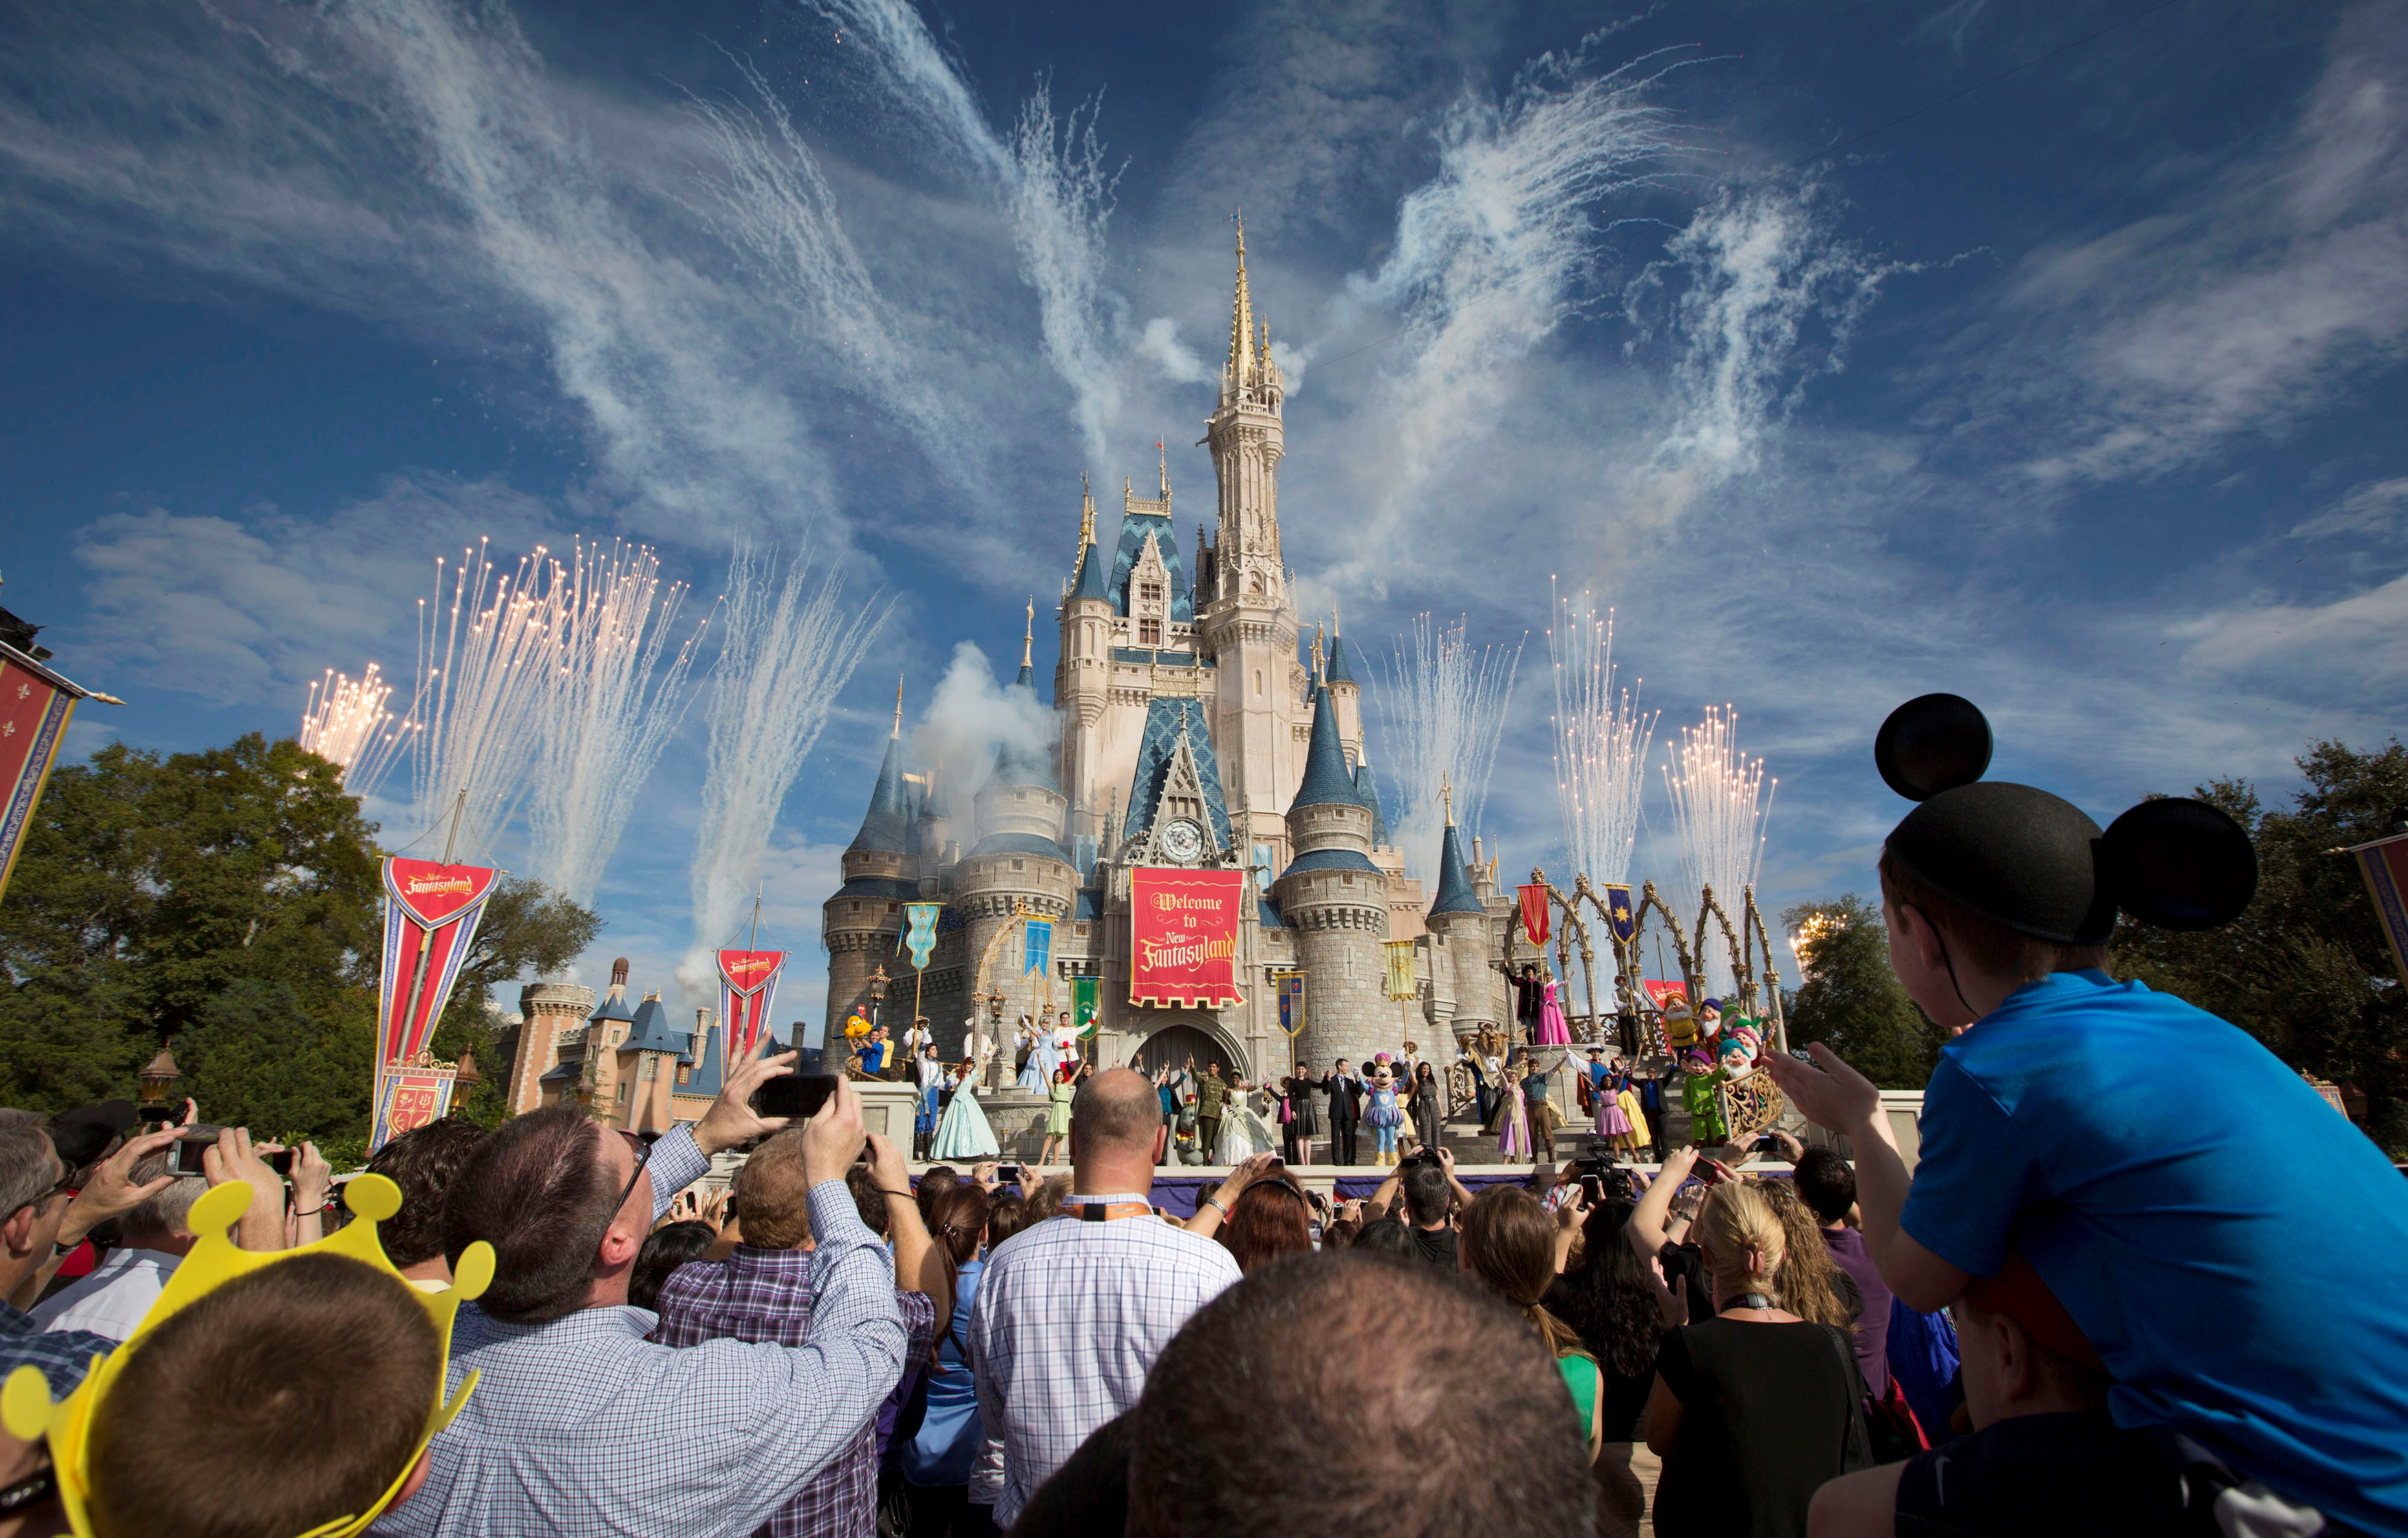 Fireworks go off around Cinderella's castle during the grand opening ceremony for Walt Disney World's Fantasyland in Lake Buena Vista, Florida